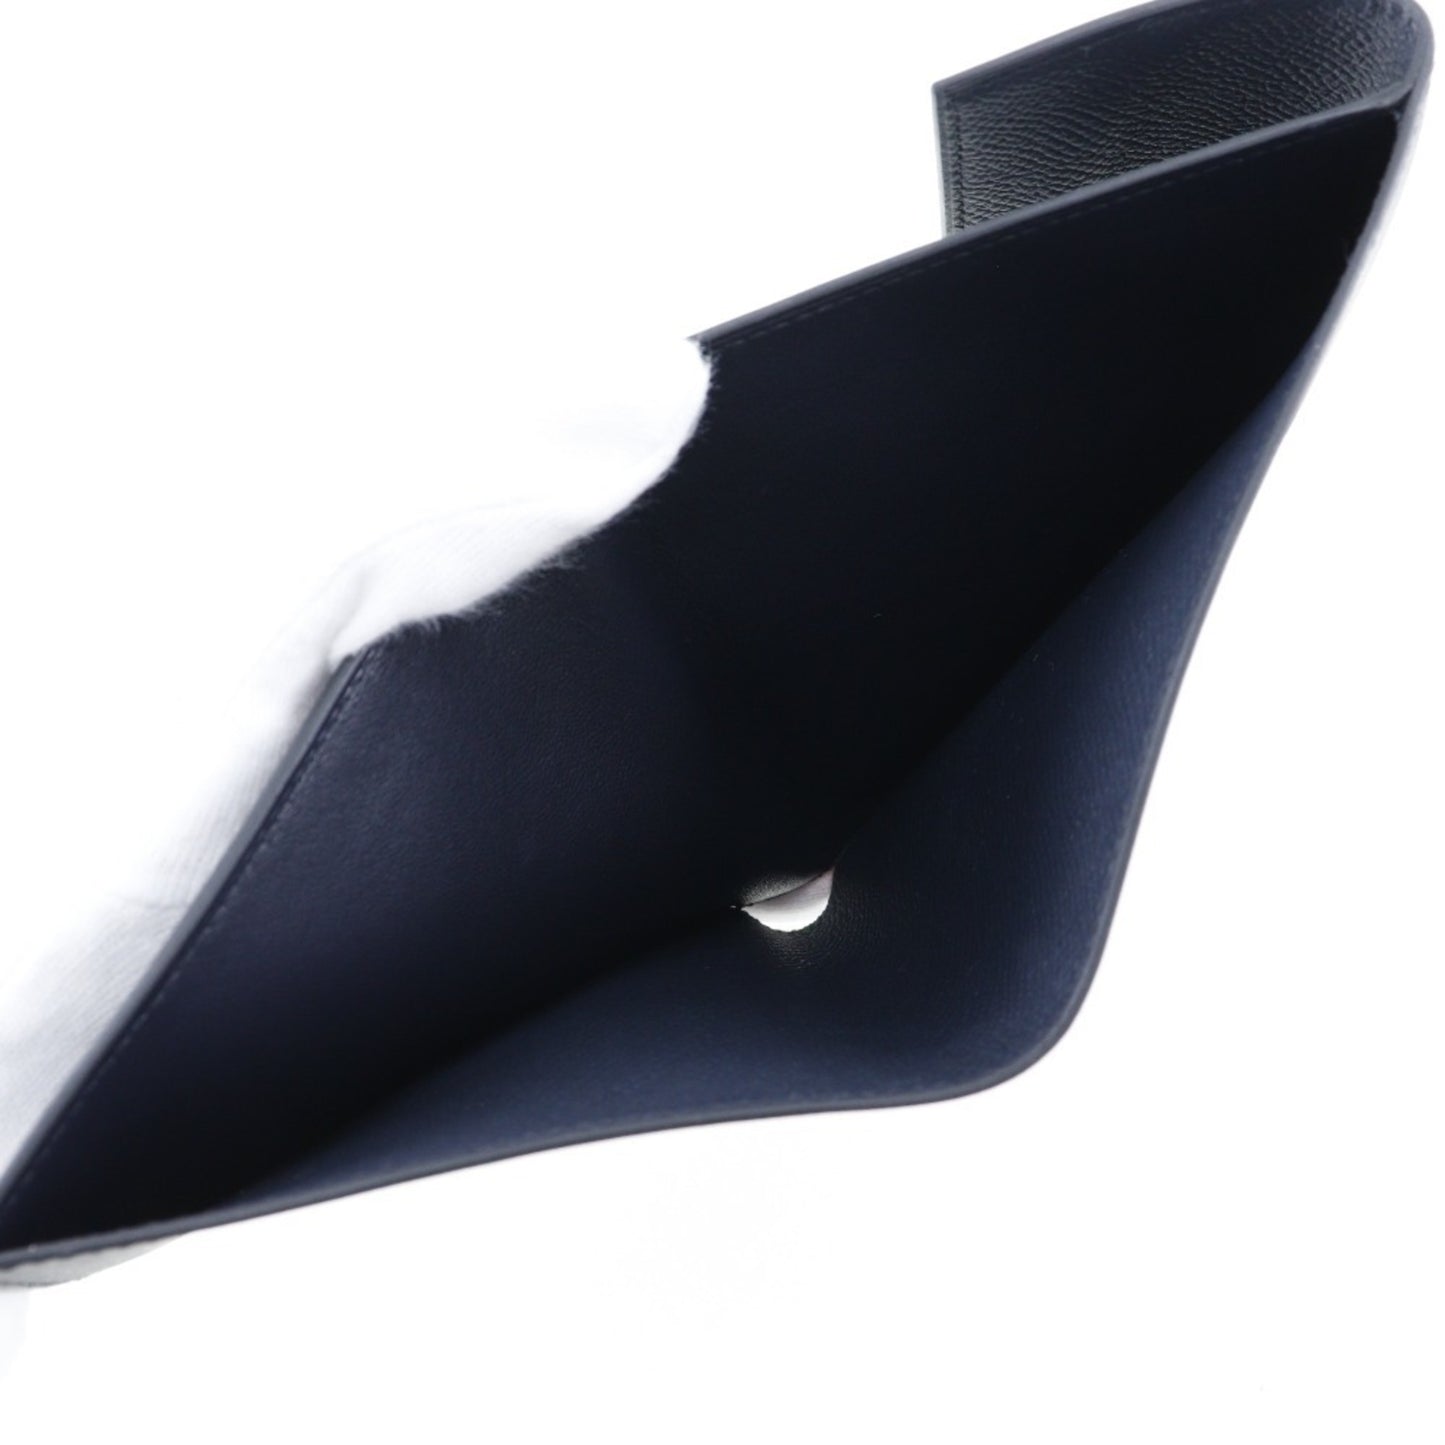 Hermes Unisex Captivating Black Leather Wallet - Excellent Condition in Black